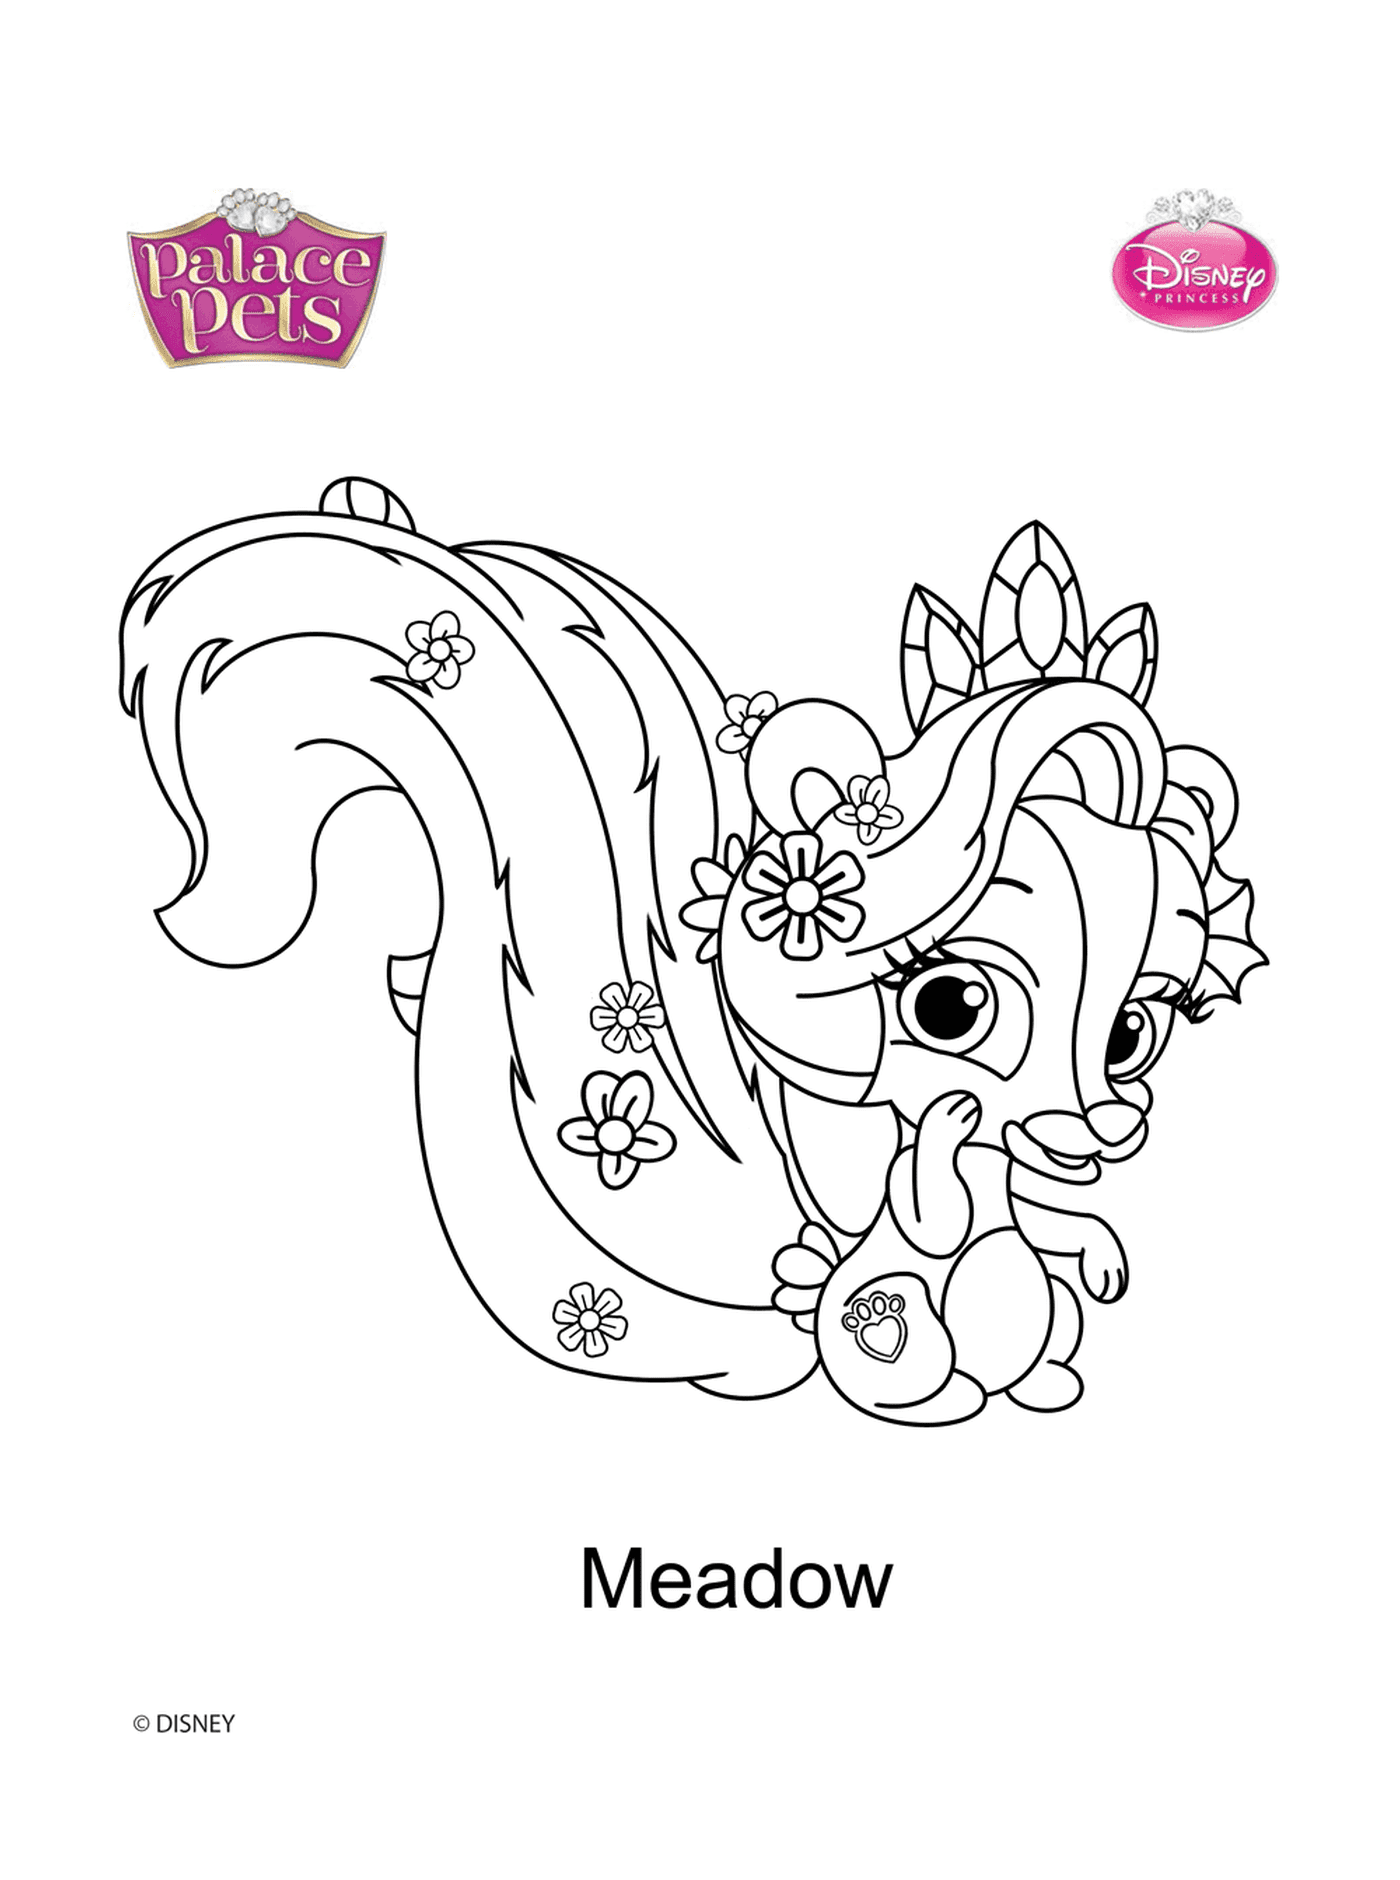   Meadow, Palace Pets de Disney 